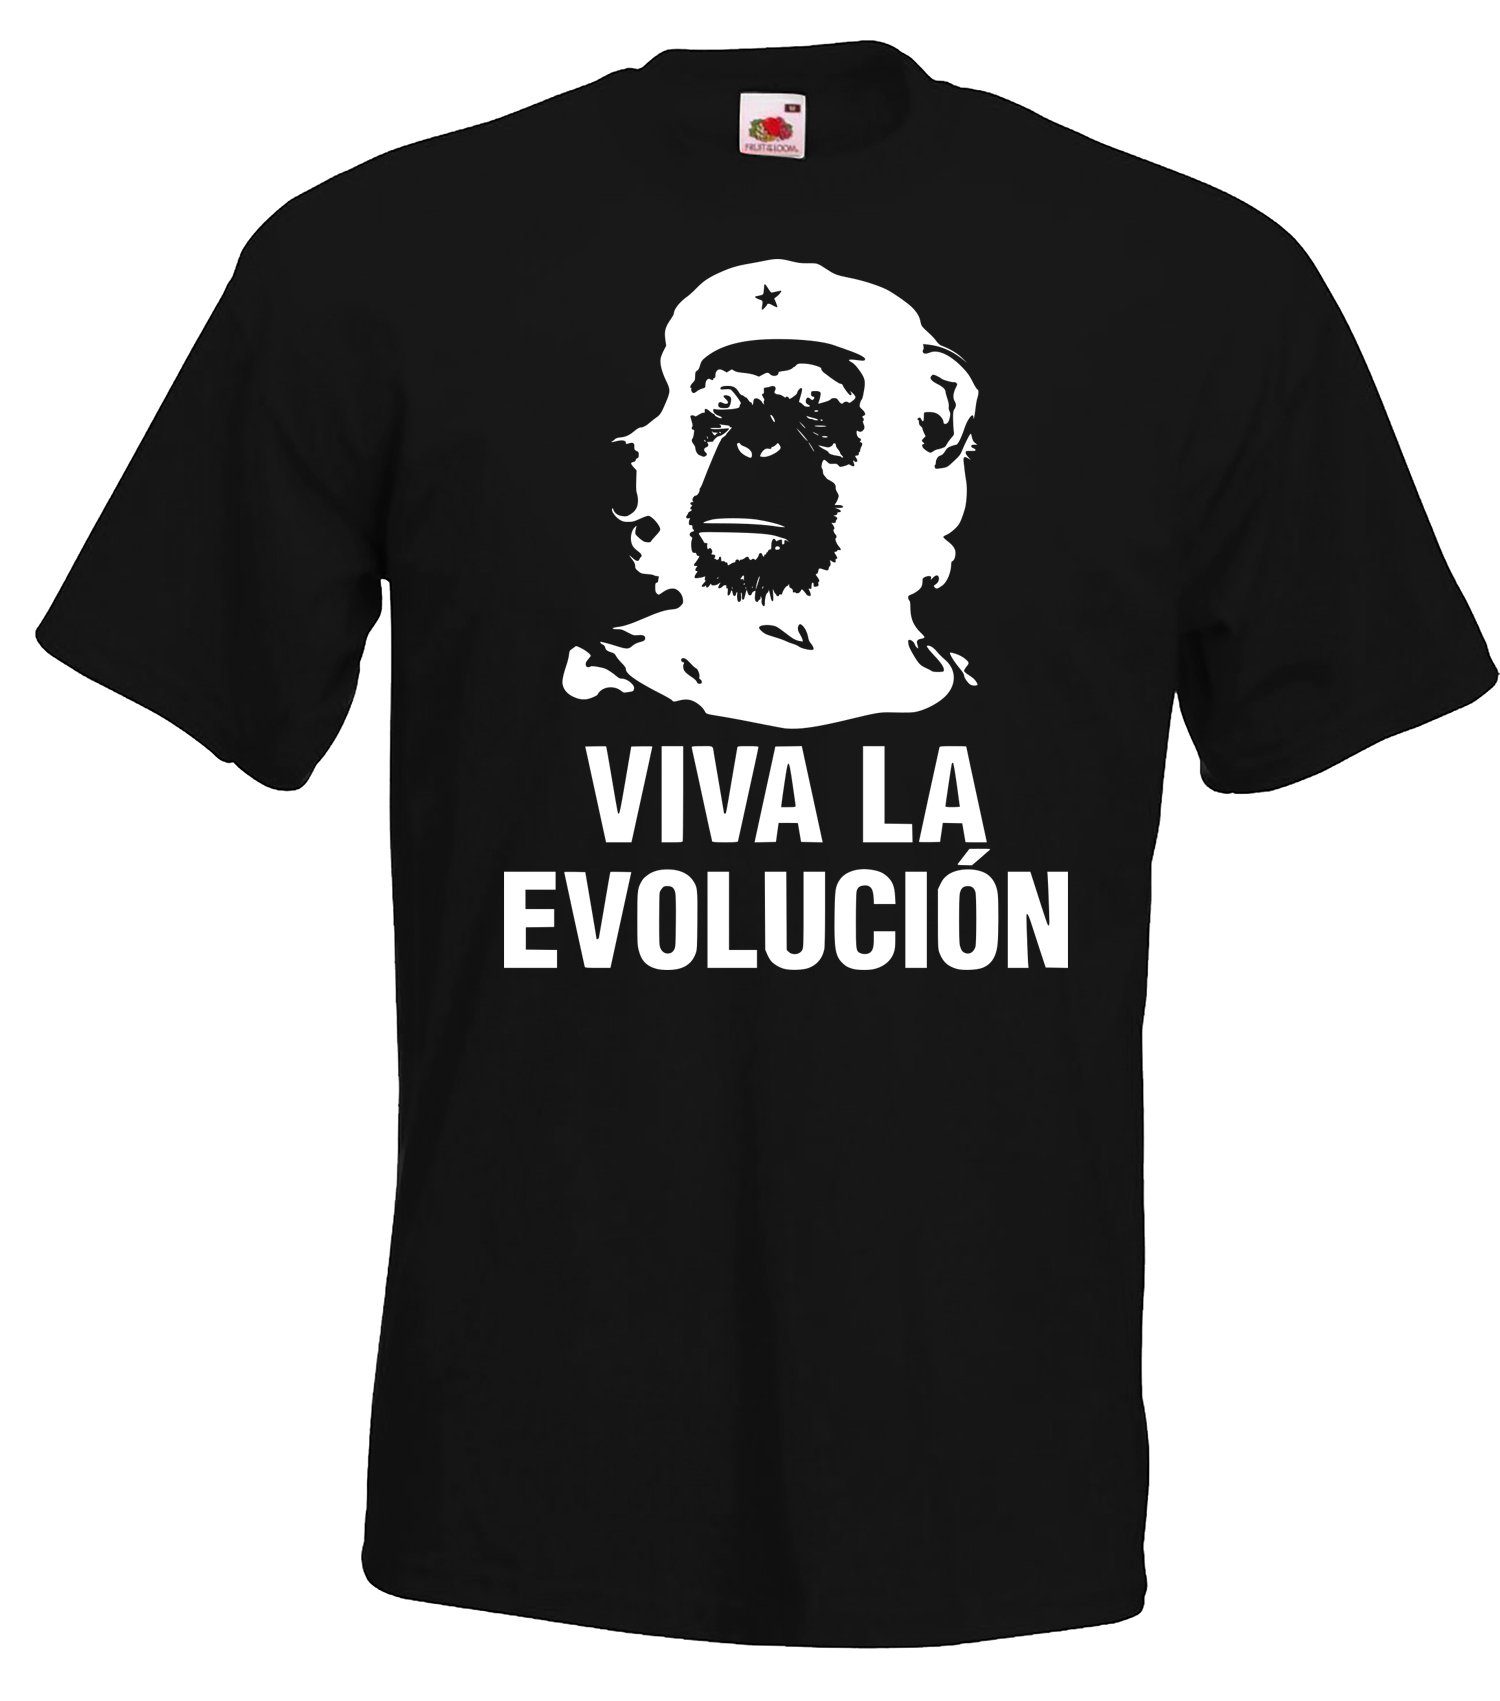 Youth Designz Evolucion Viva T-Shirt Frontdruck mit la Schwarz Herren Fun T-Shirt trendigem